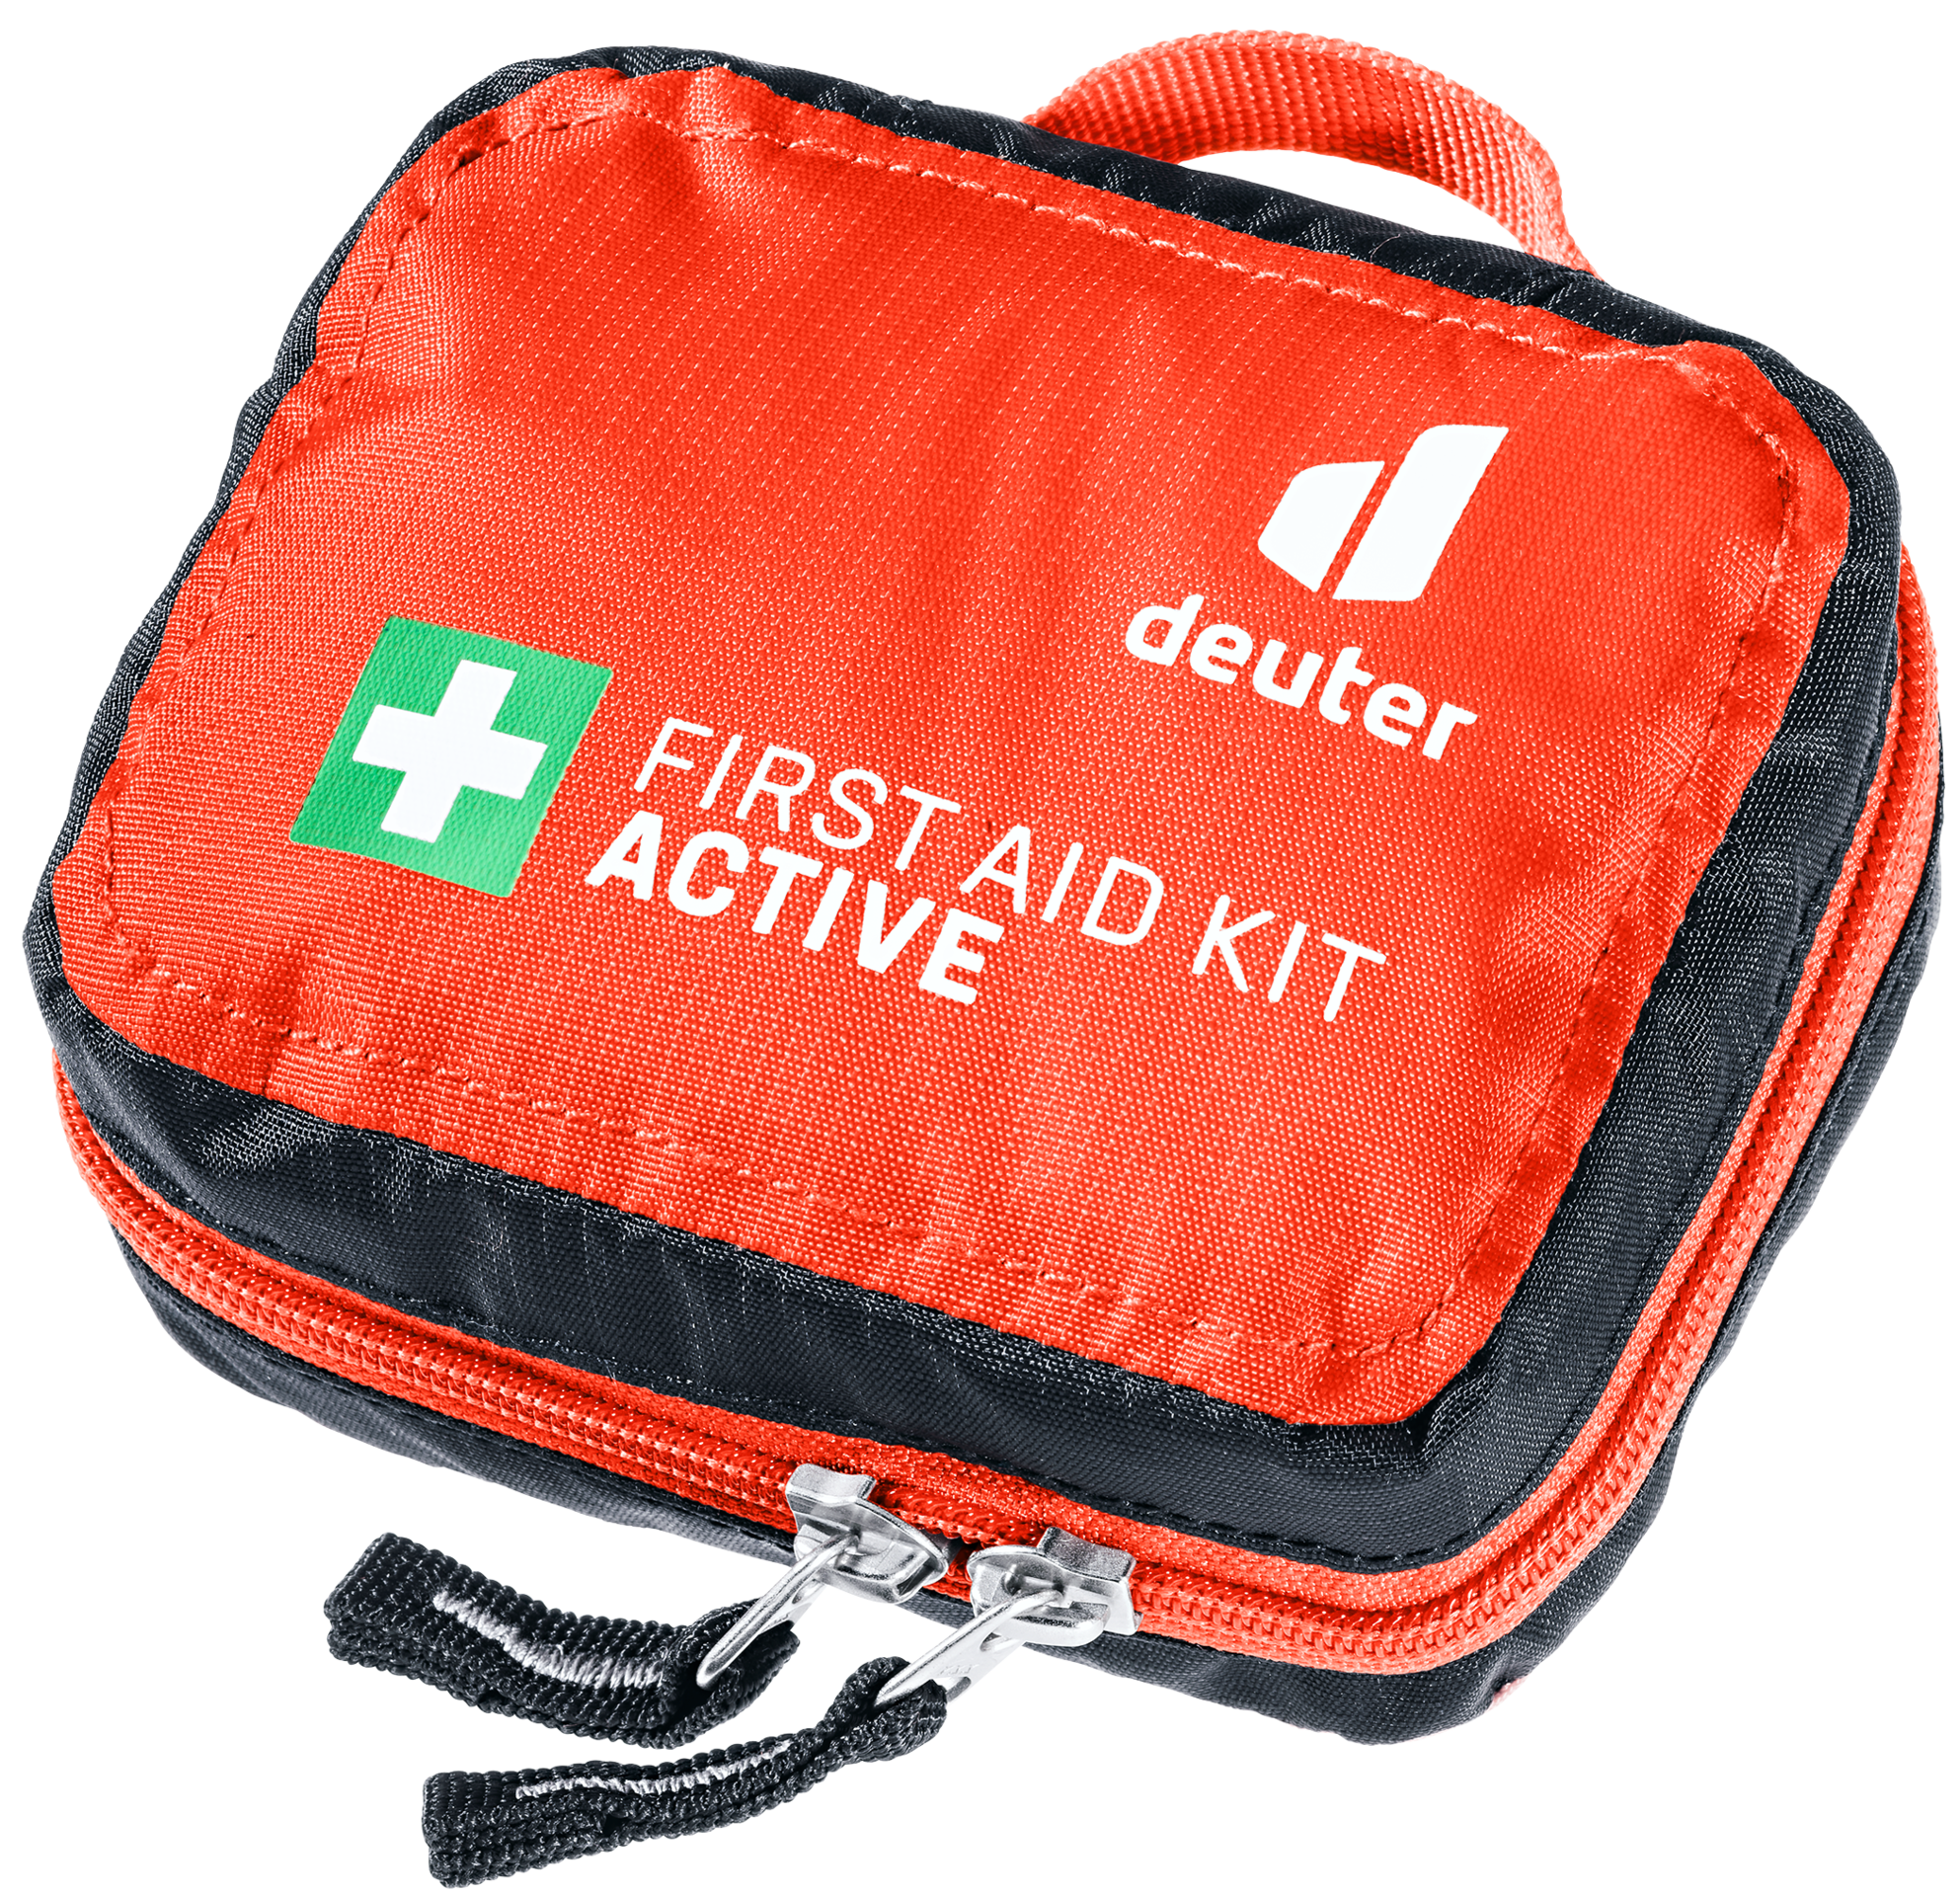 BUGATTI First Aid Kit DIN13164 Holthaus Medical VERBANDTASCHE PREMIER  SECOURS